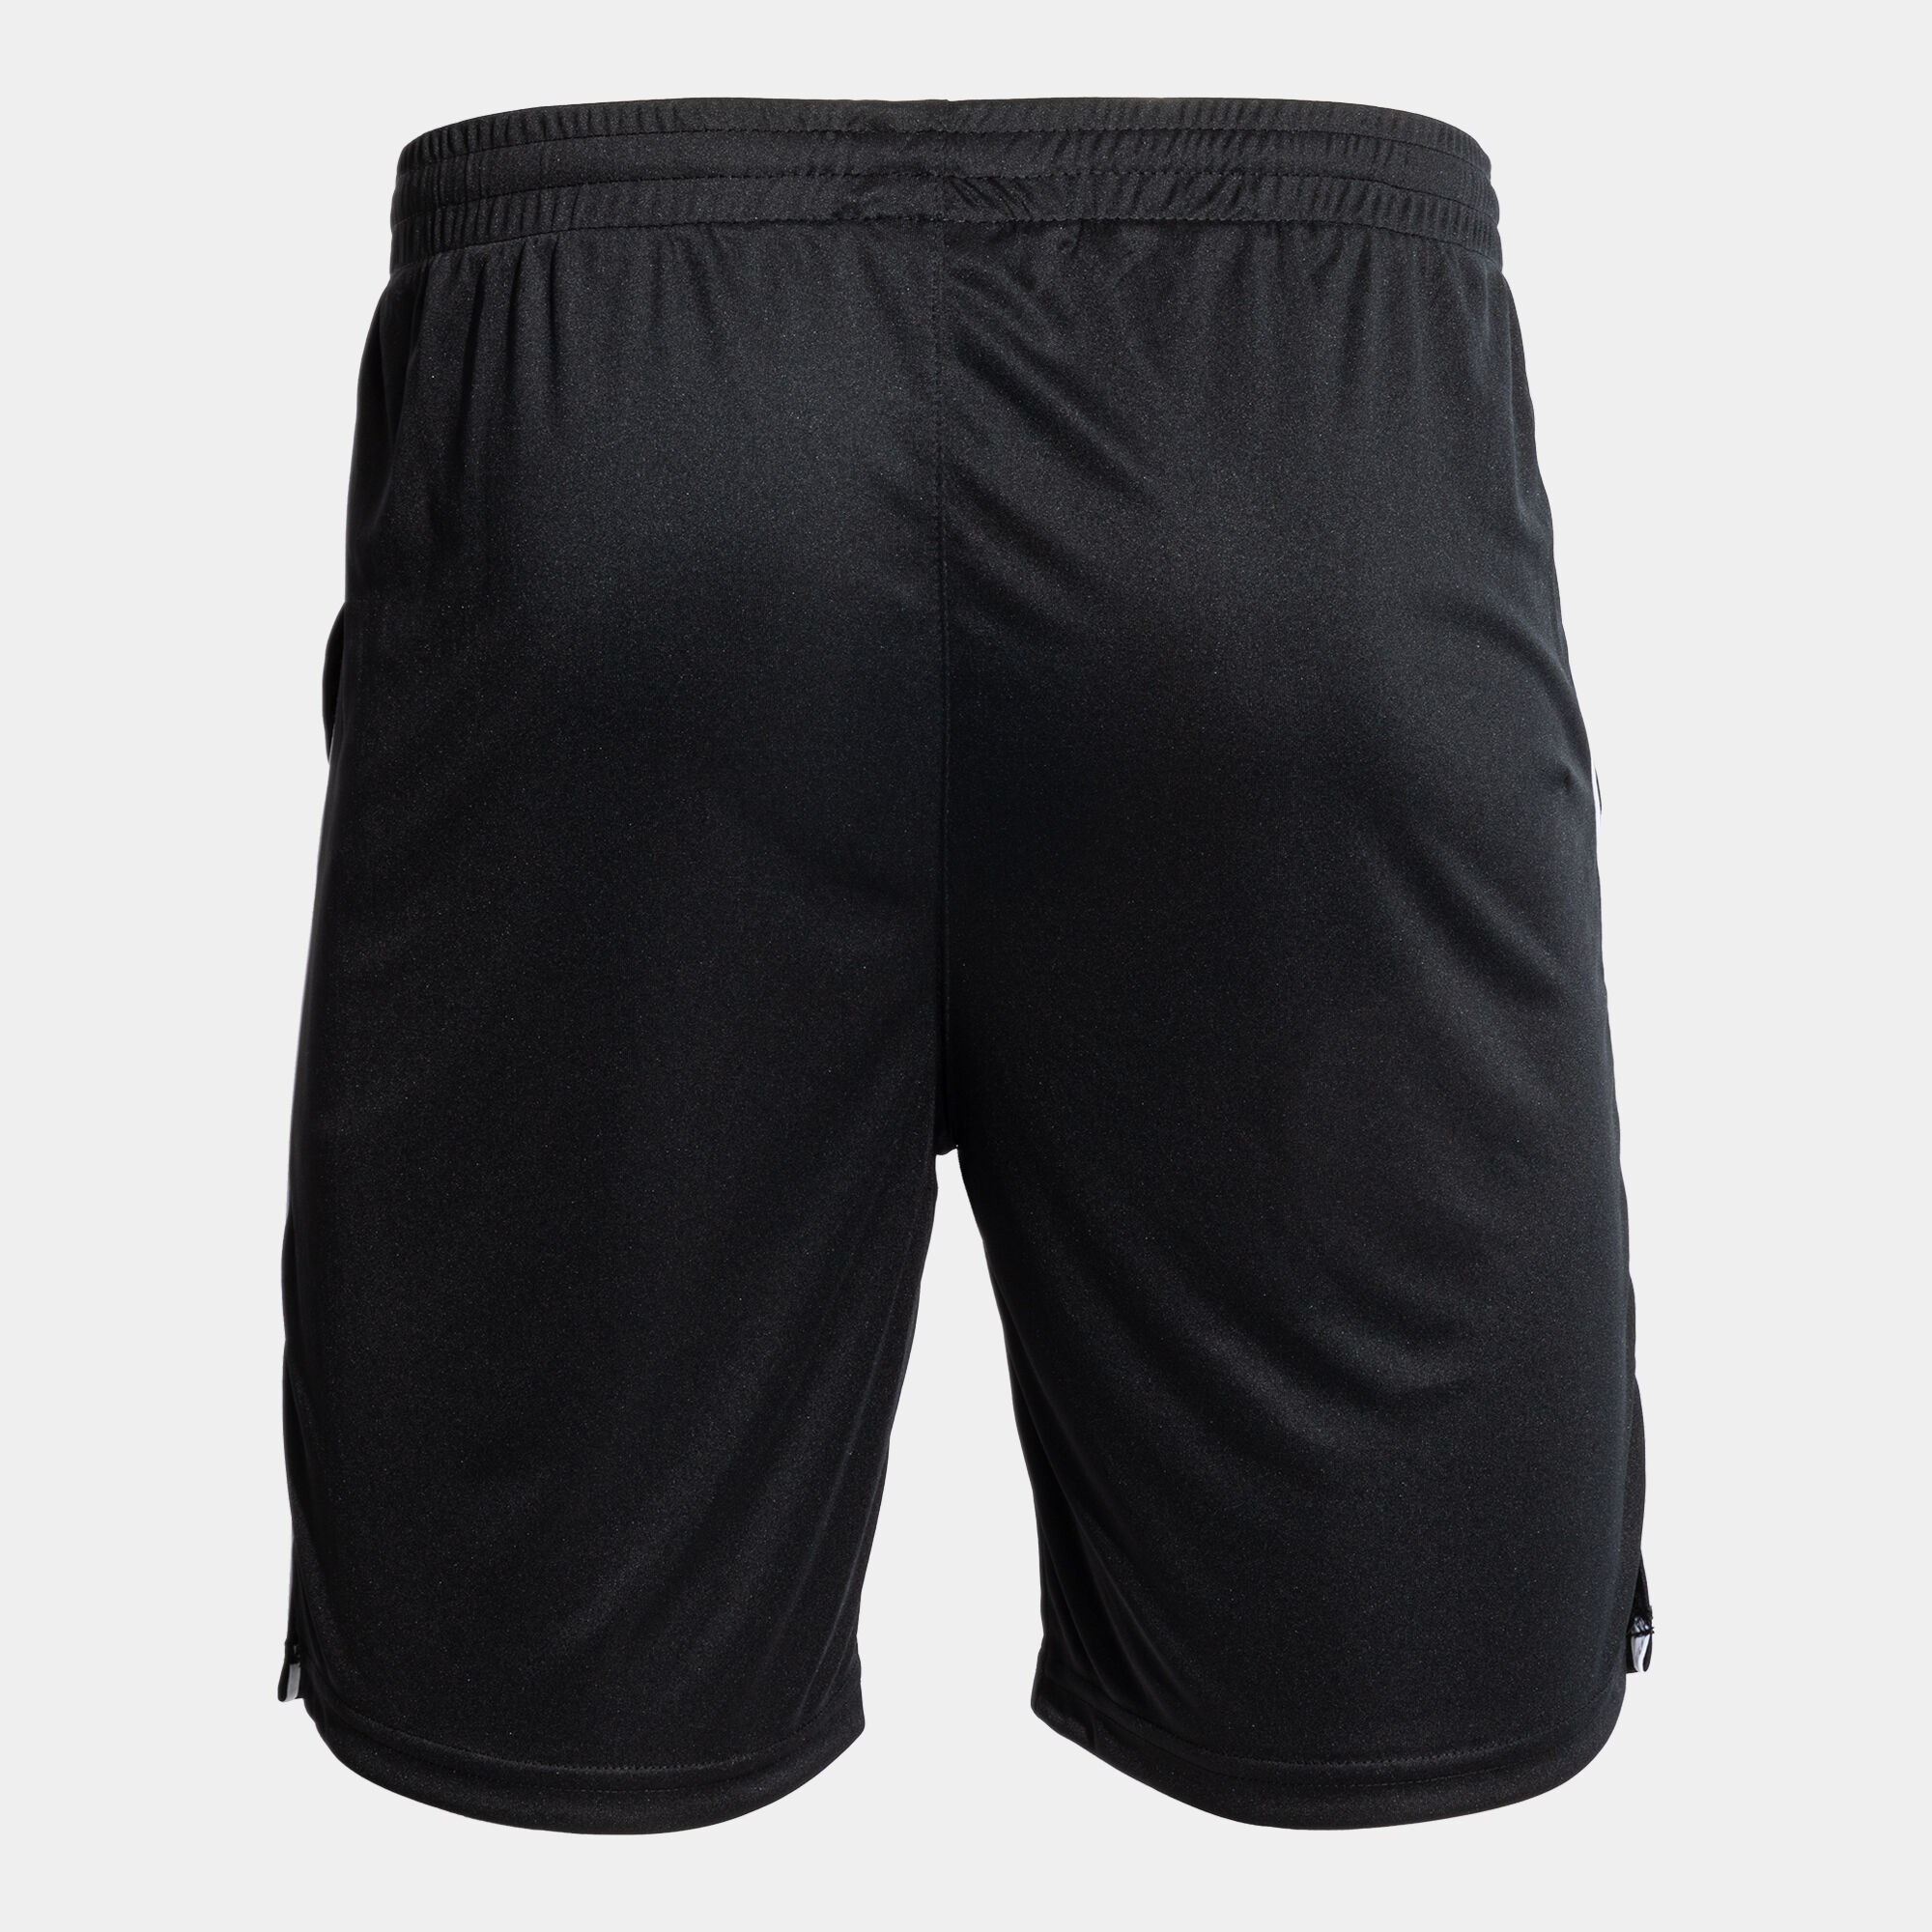 Bermuda shorts man Open III black white